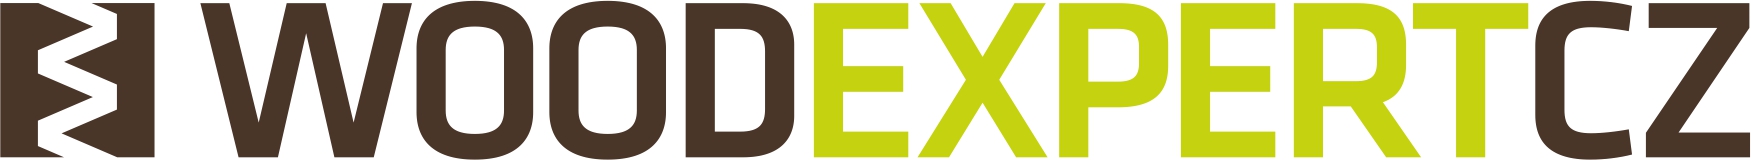 Logo Woodexpert 2018